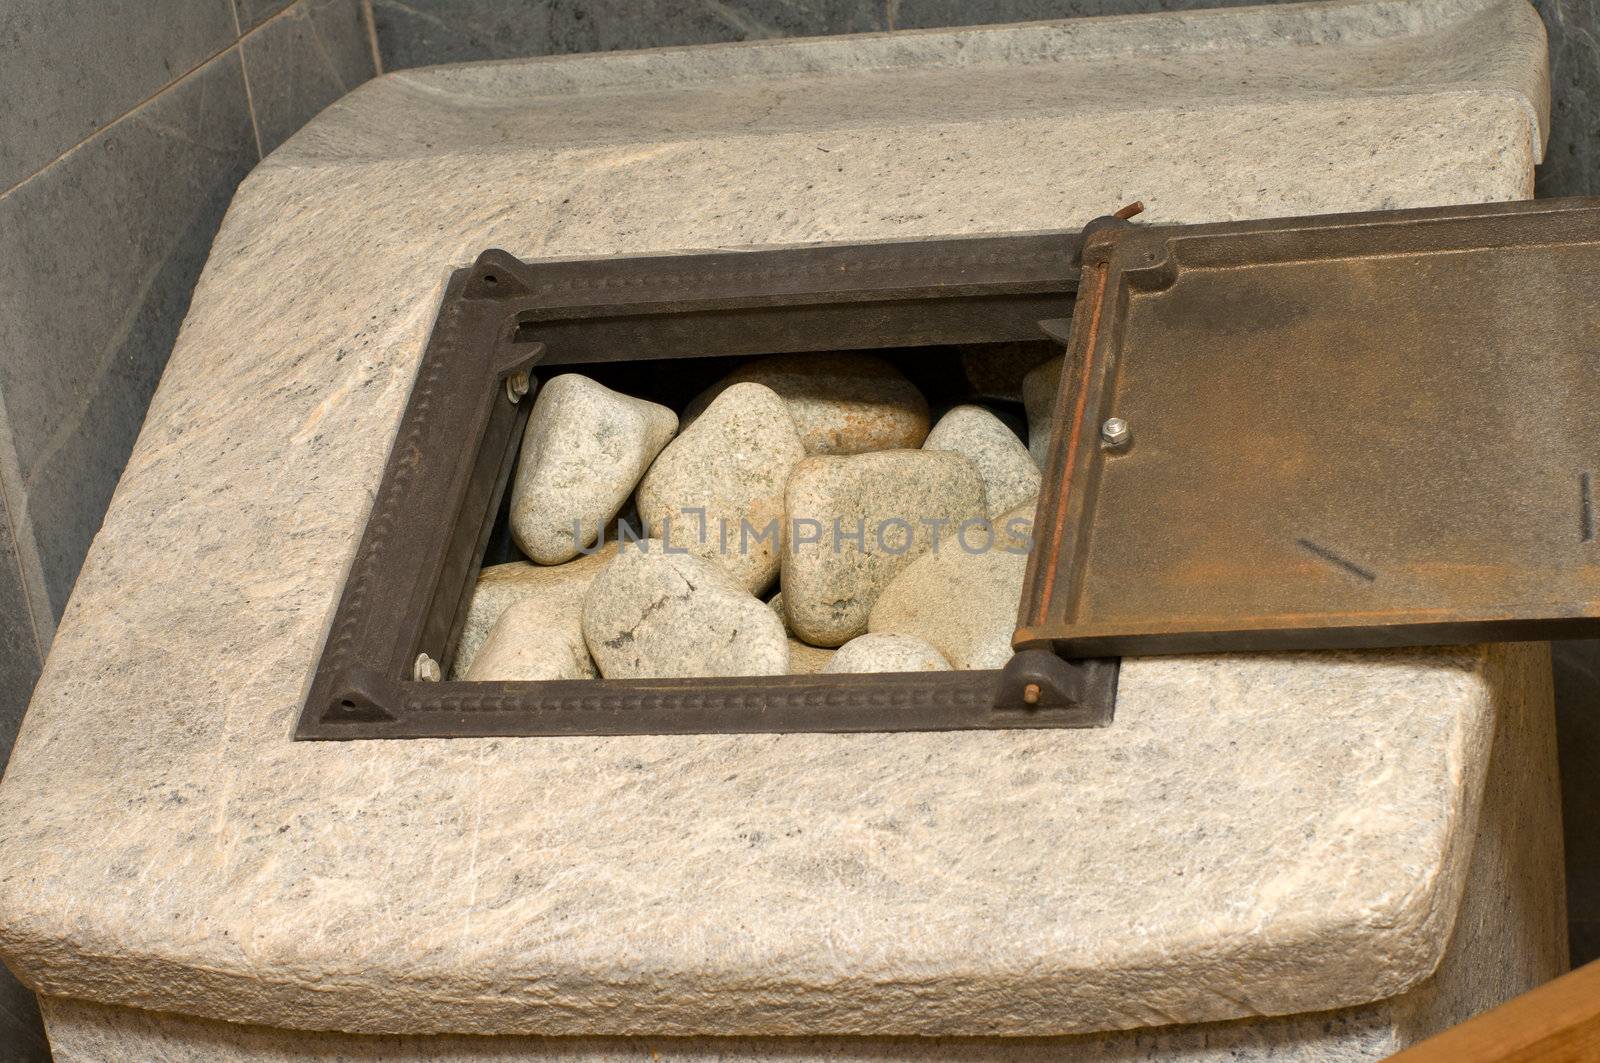 Stones for opening the door of bath furnace.